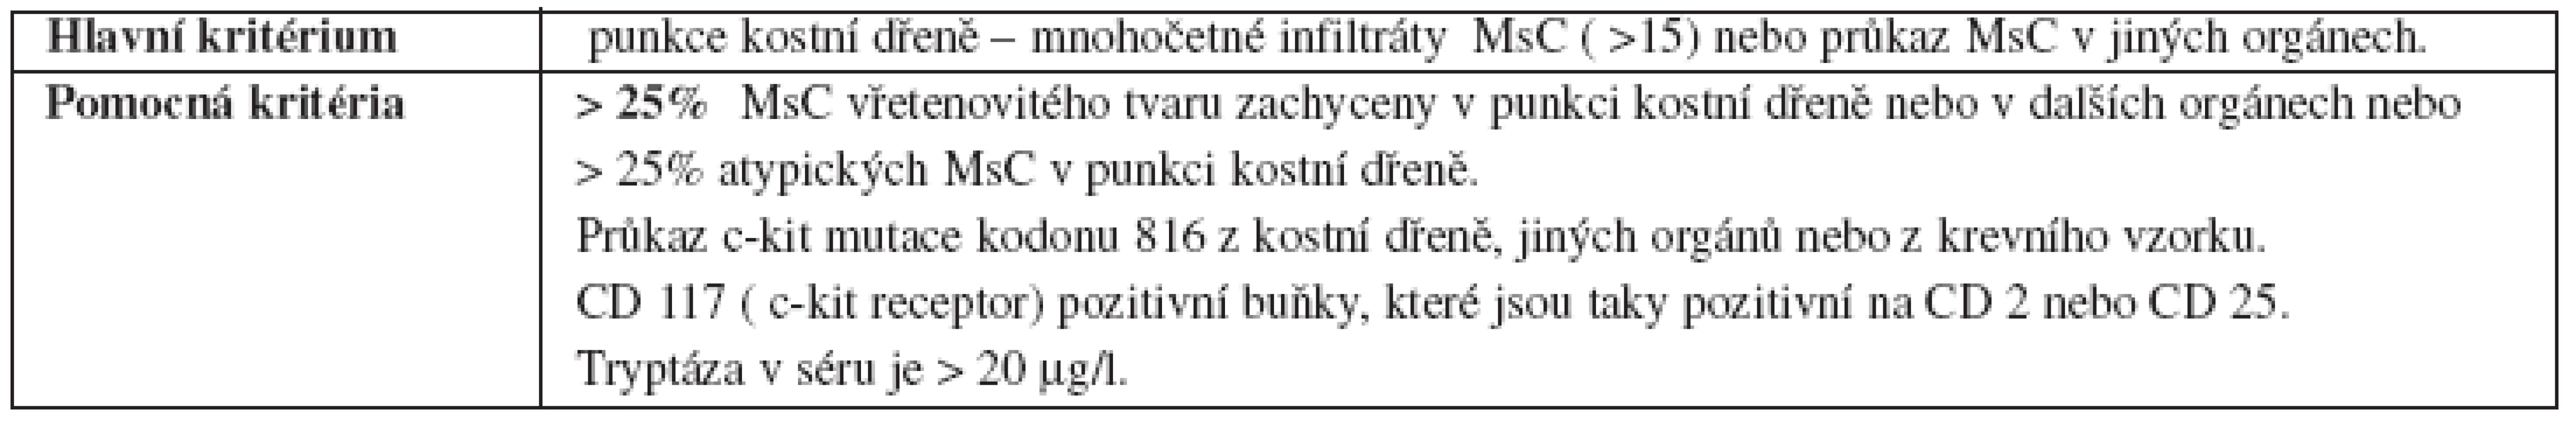 Diagnostická kritéria systémové mastocytózy
Heide R,Beishuizen A et al: Mastocytoses in Children : A Protocol For Management. Pediatric Dermatology 2008;25 N4, 493-500.